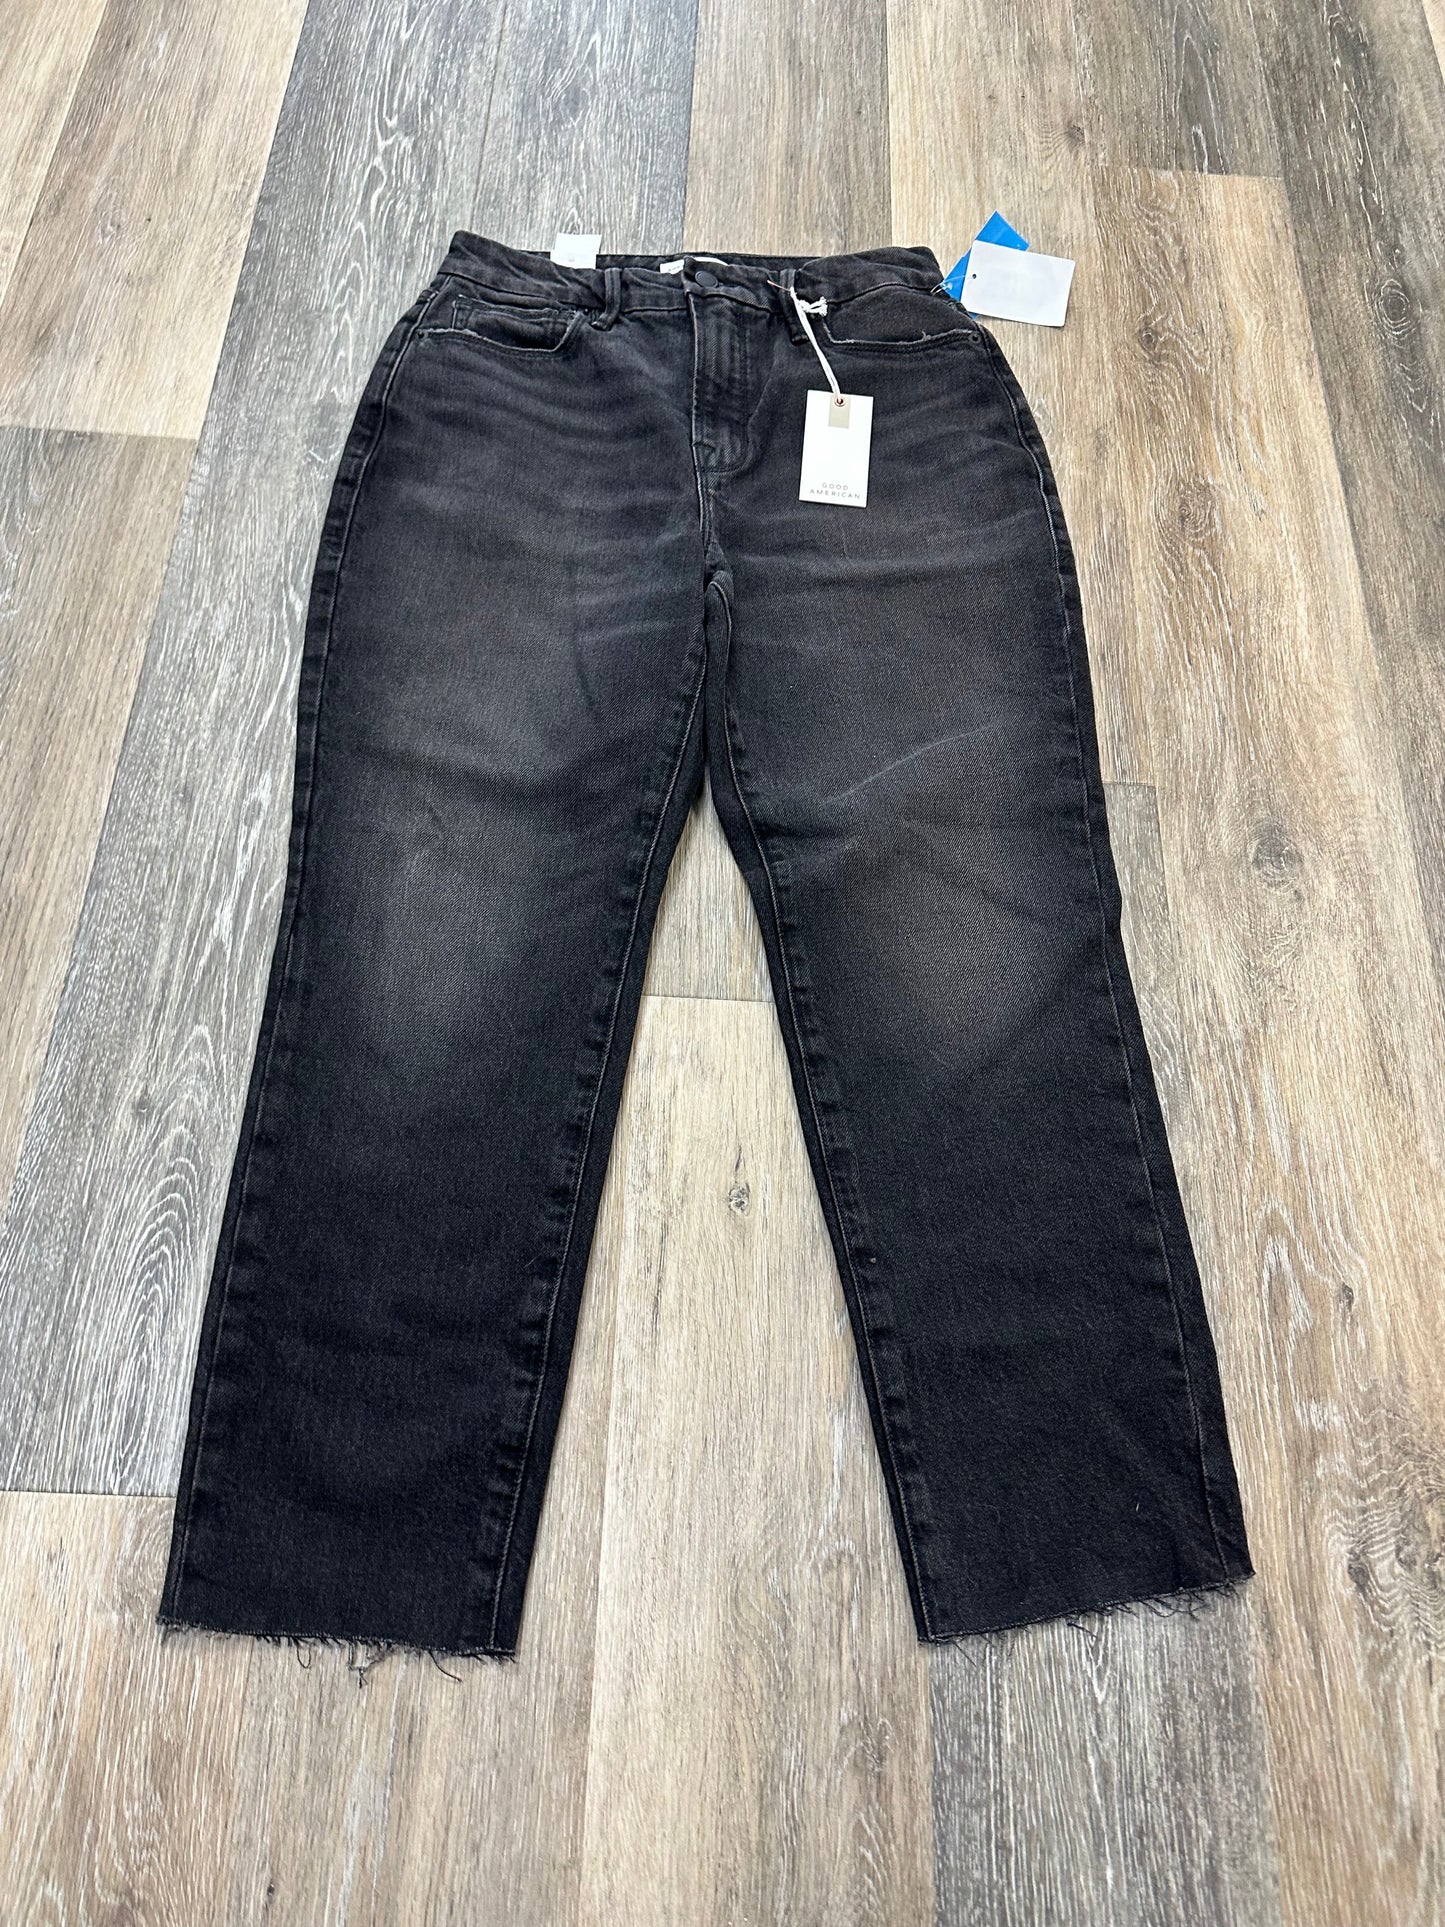 Black Denim Jeans Straight Good American, Size 2